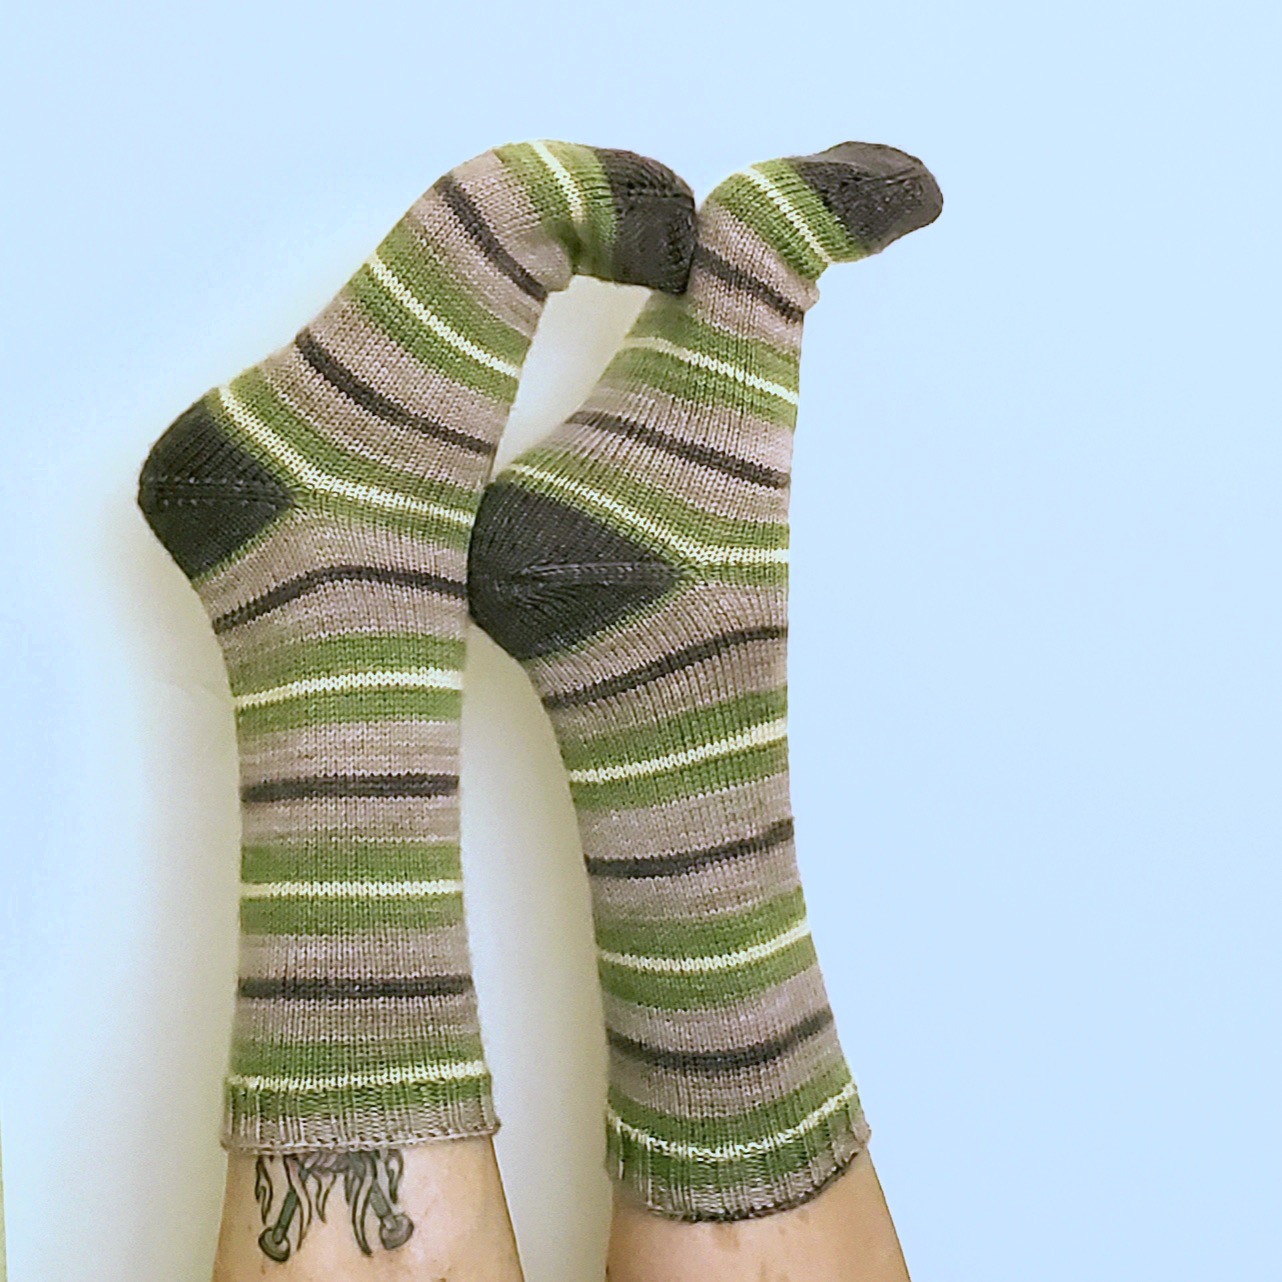 4 Ways to Cast-On Cuff-Down Socks